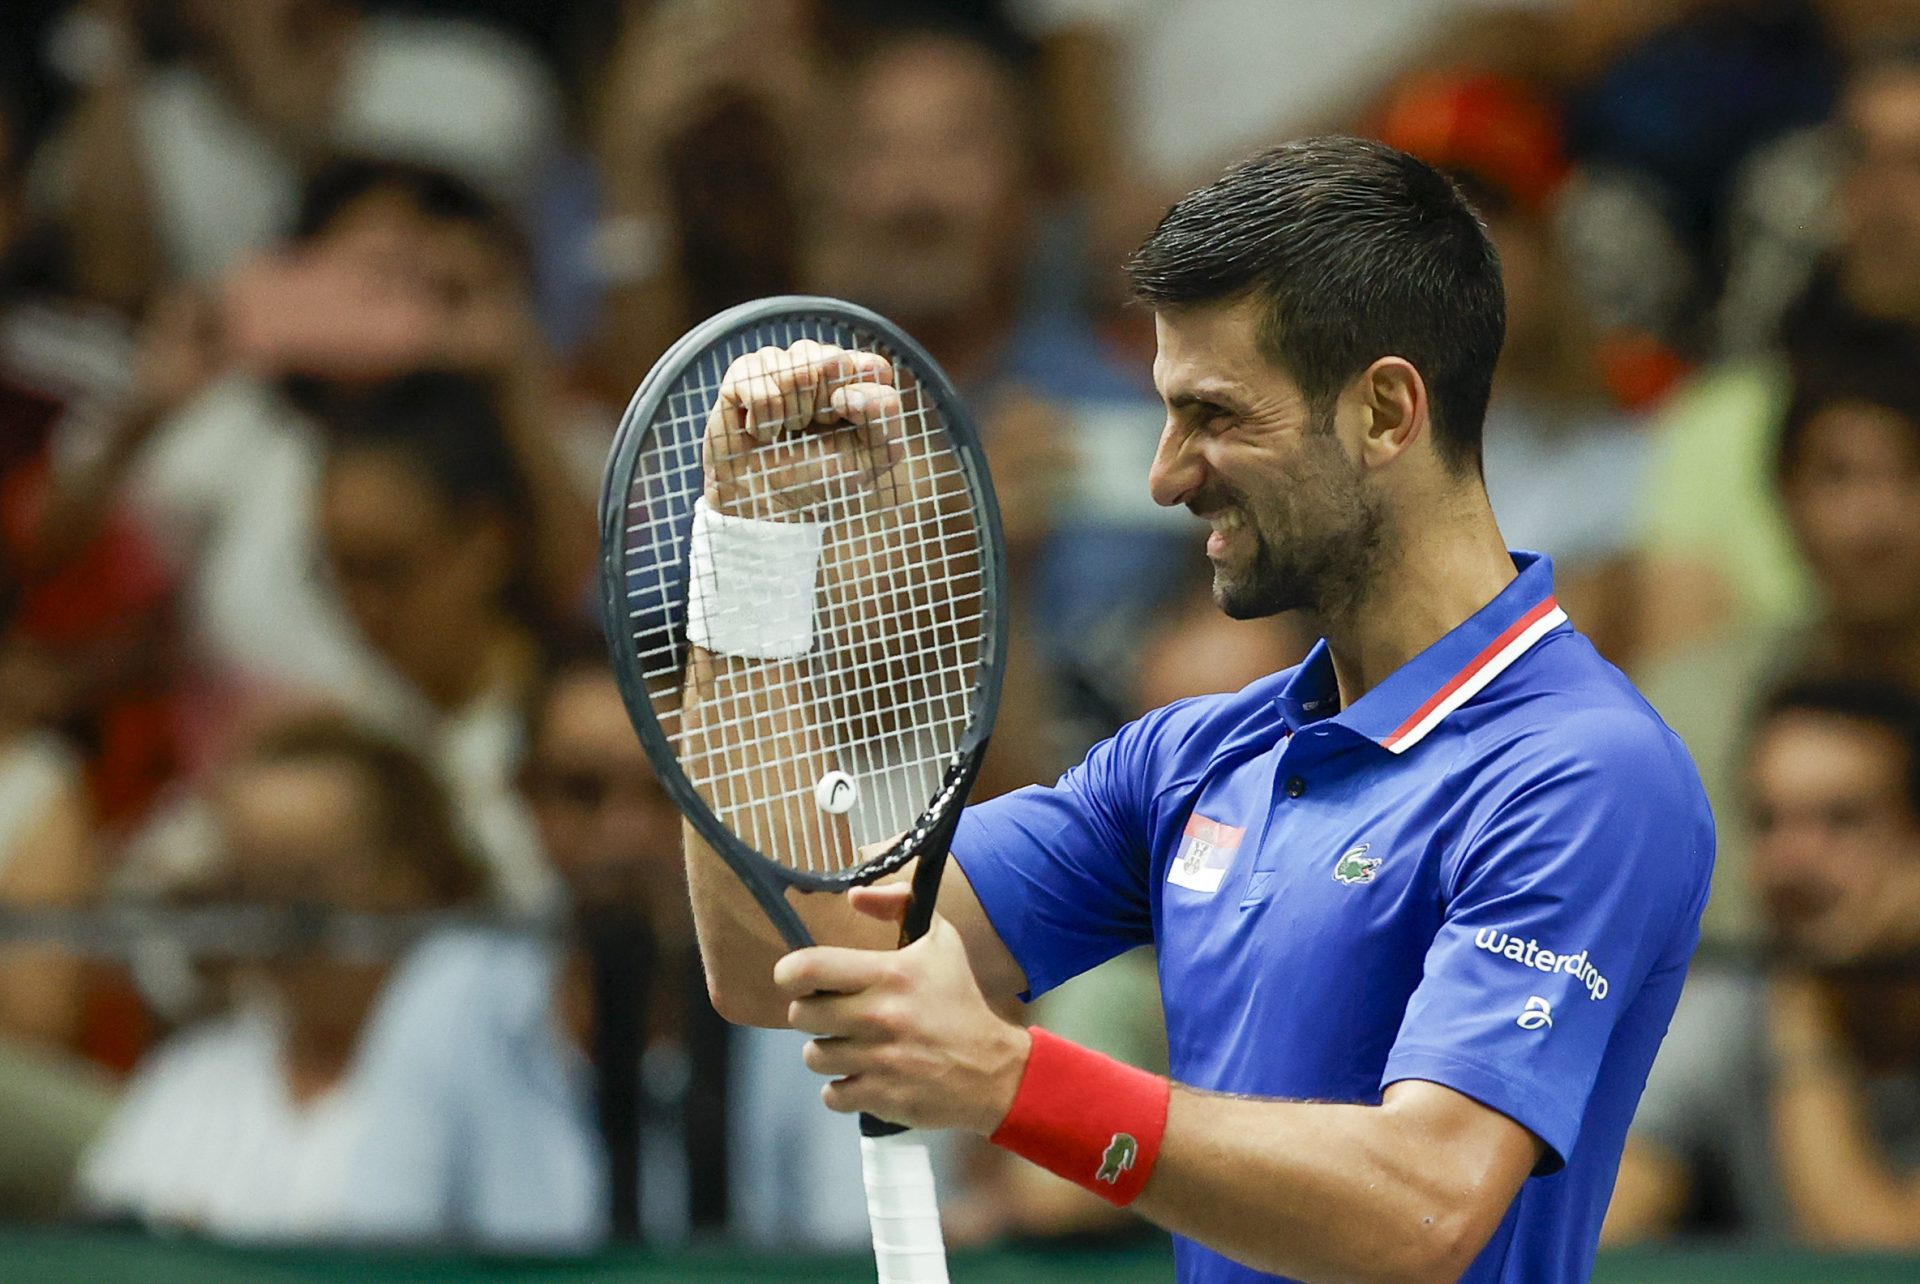 El tenista serbio Novak Djokovic celebra su victoria tras derrotar al español Alejandro Davidovich.